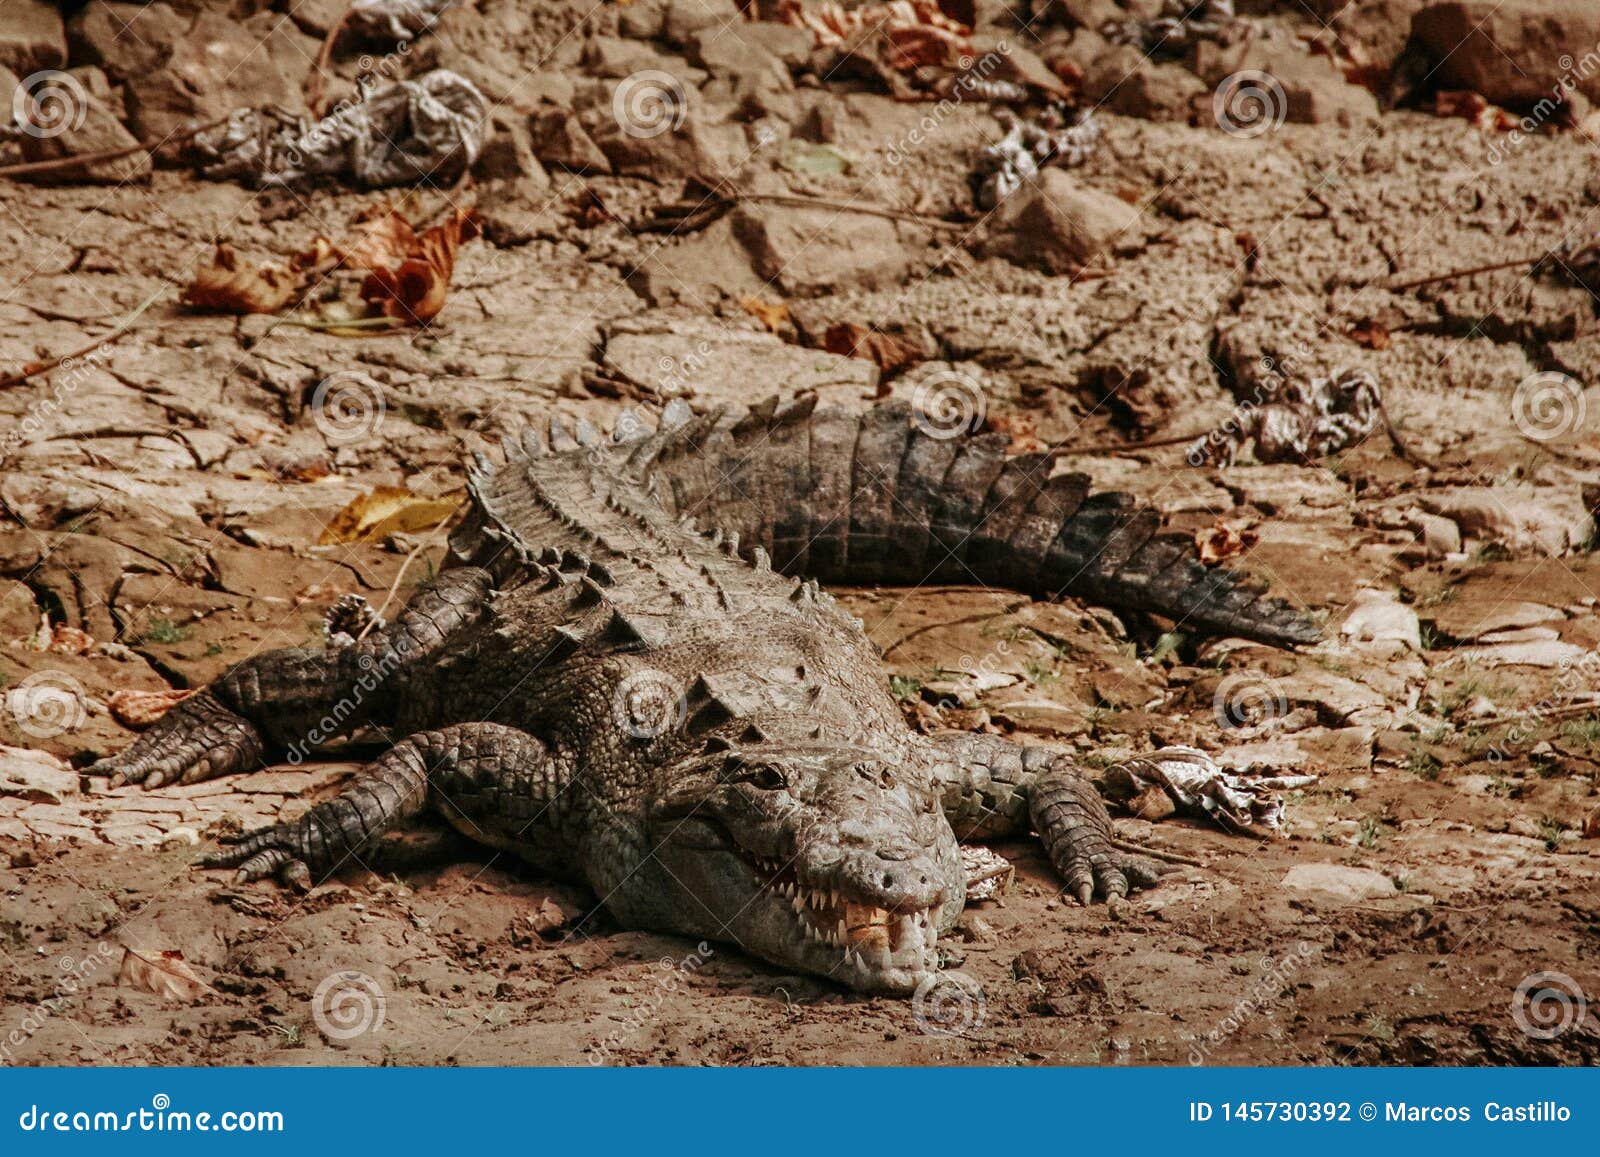 crocodile in caÃÂ±on del sumidero chiapas mexico, mexican animals